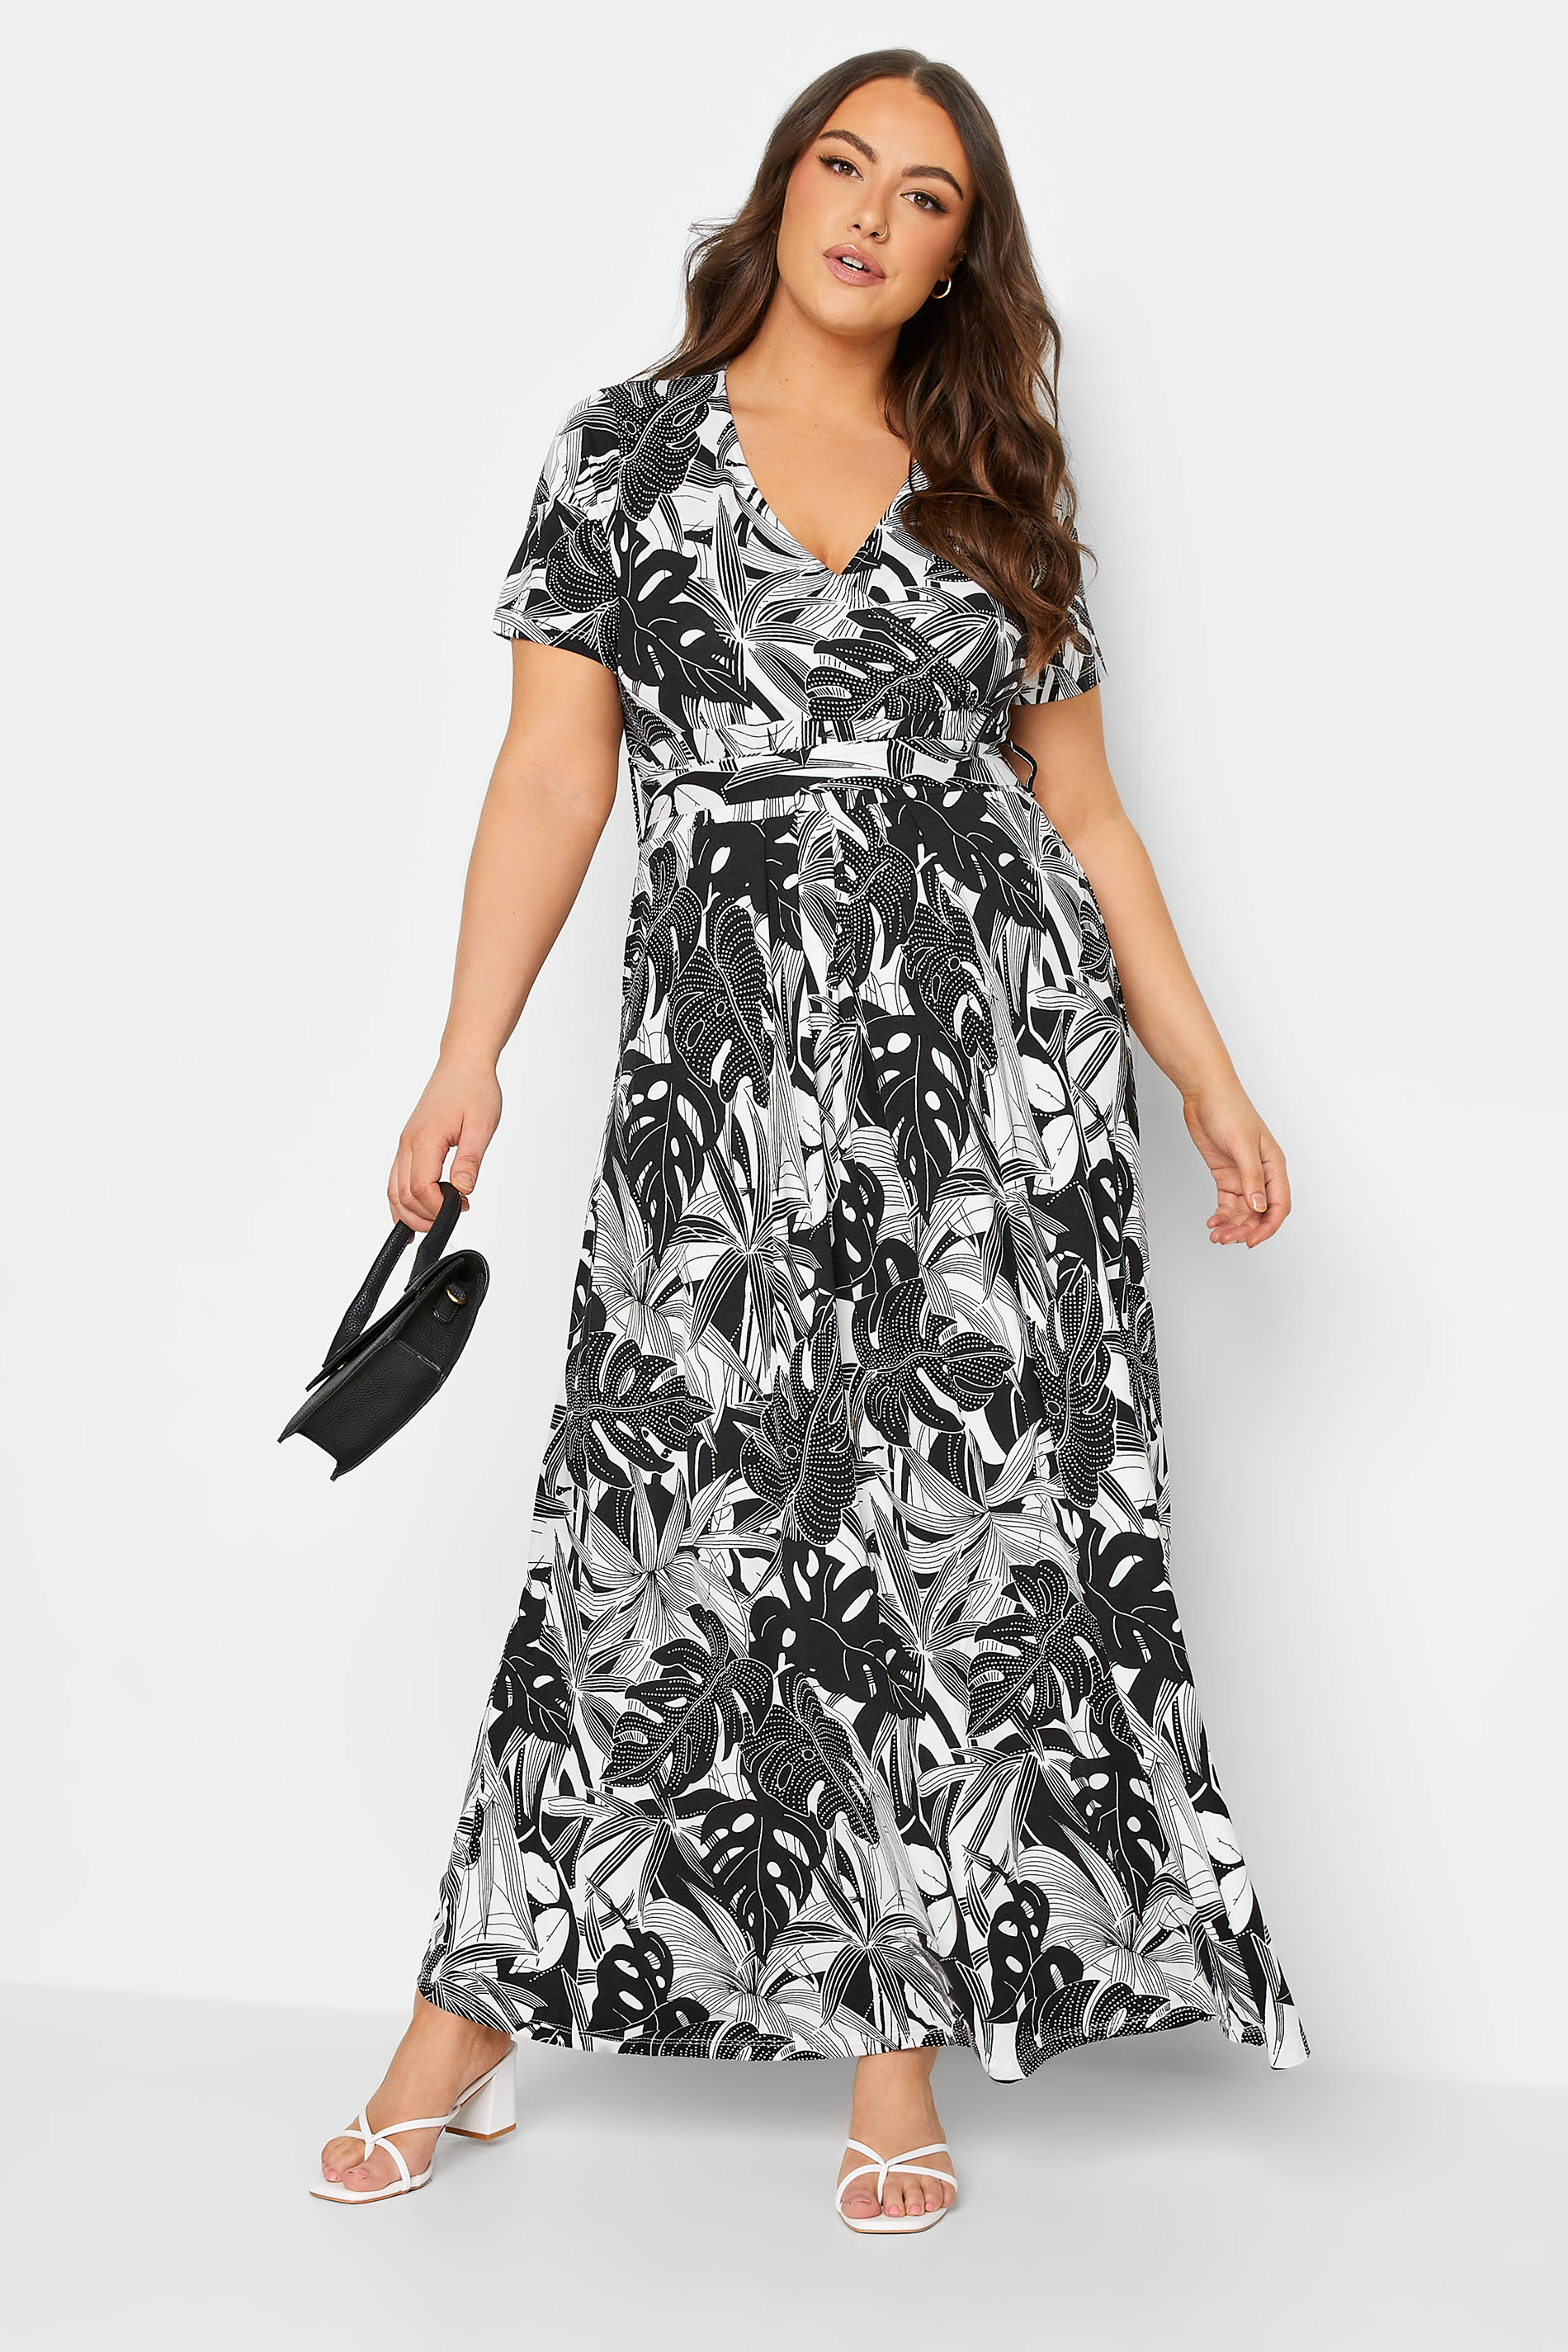 YOURS Plus Size Curve Black & White Floral Leaf Print Front Tie Maxi Dress| Yours Clothing  2